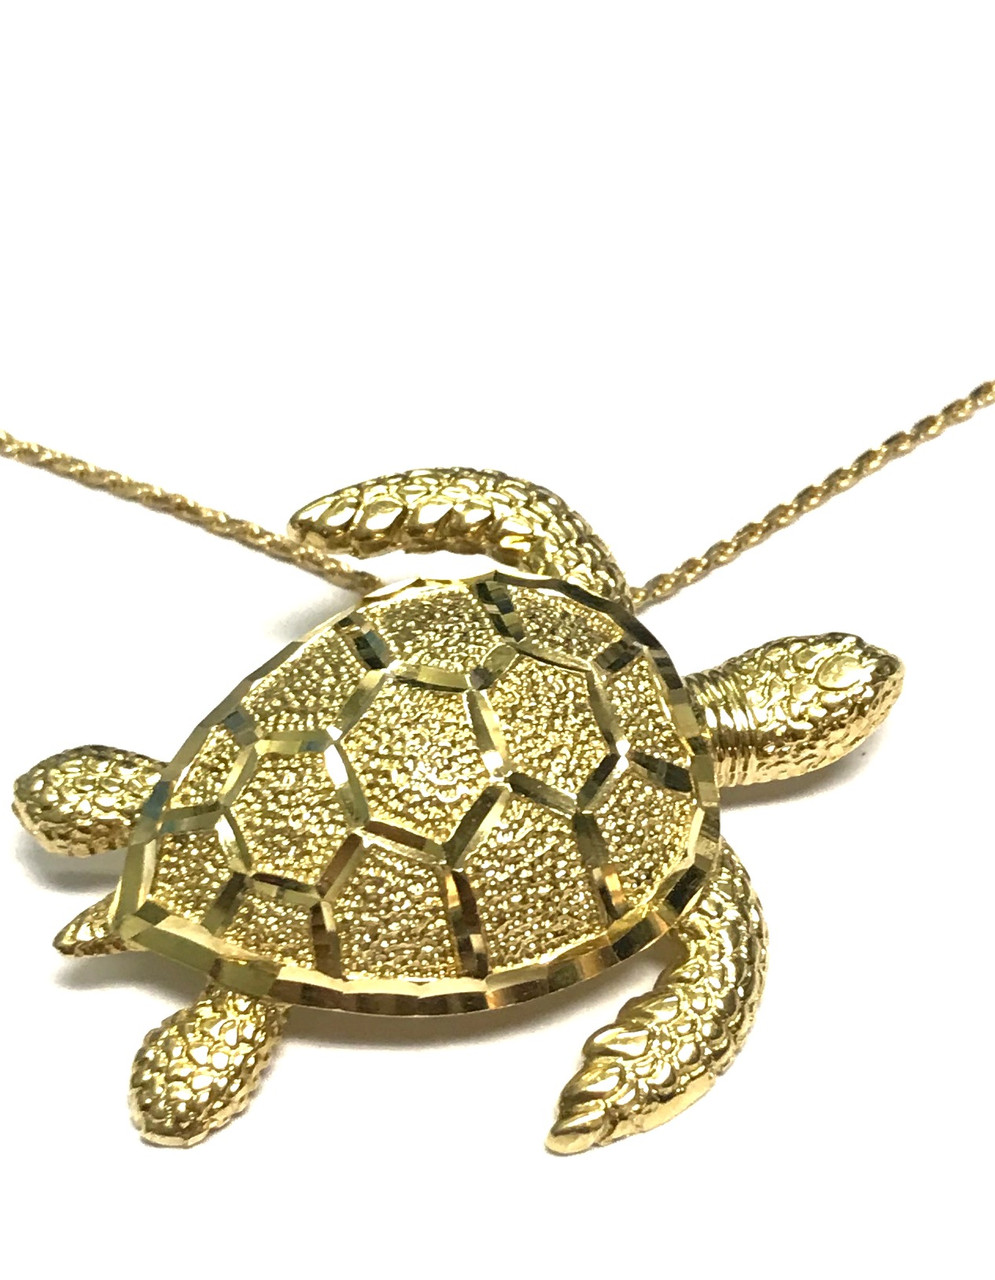 9ct Gold Turtle Pendant Necklace | Posh Totty Designs